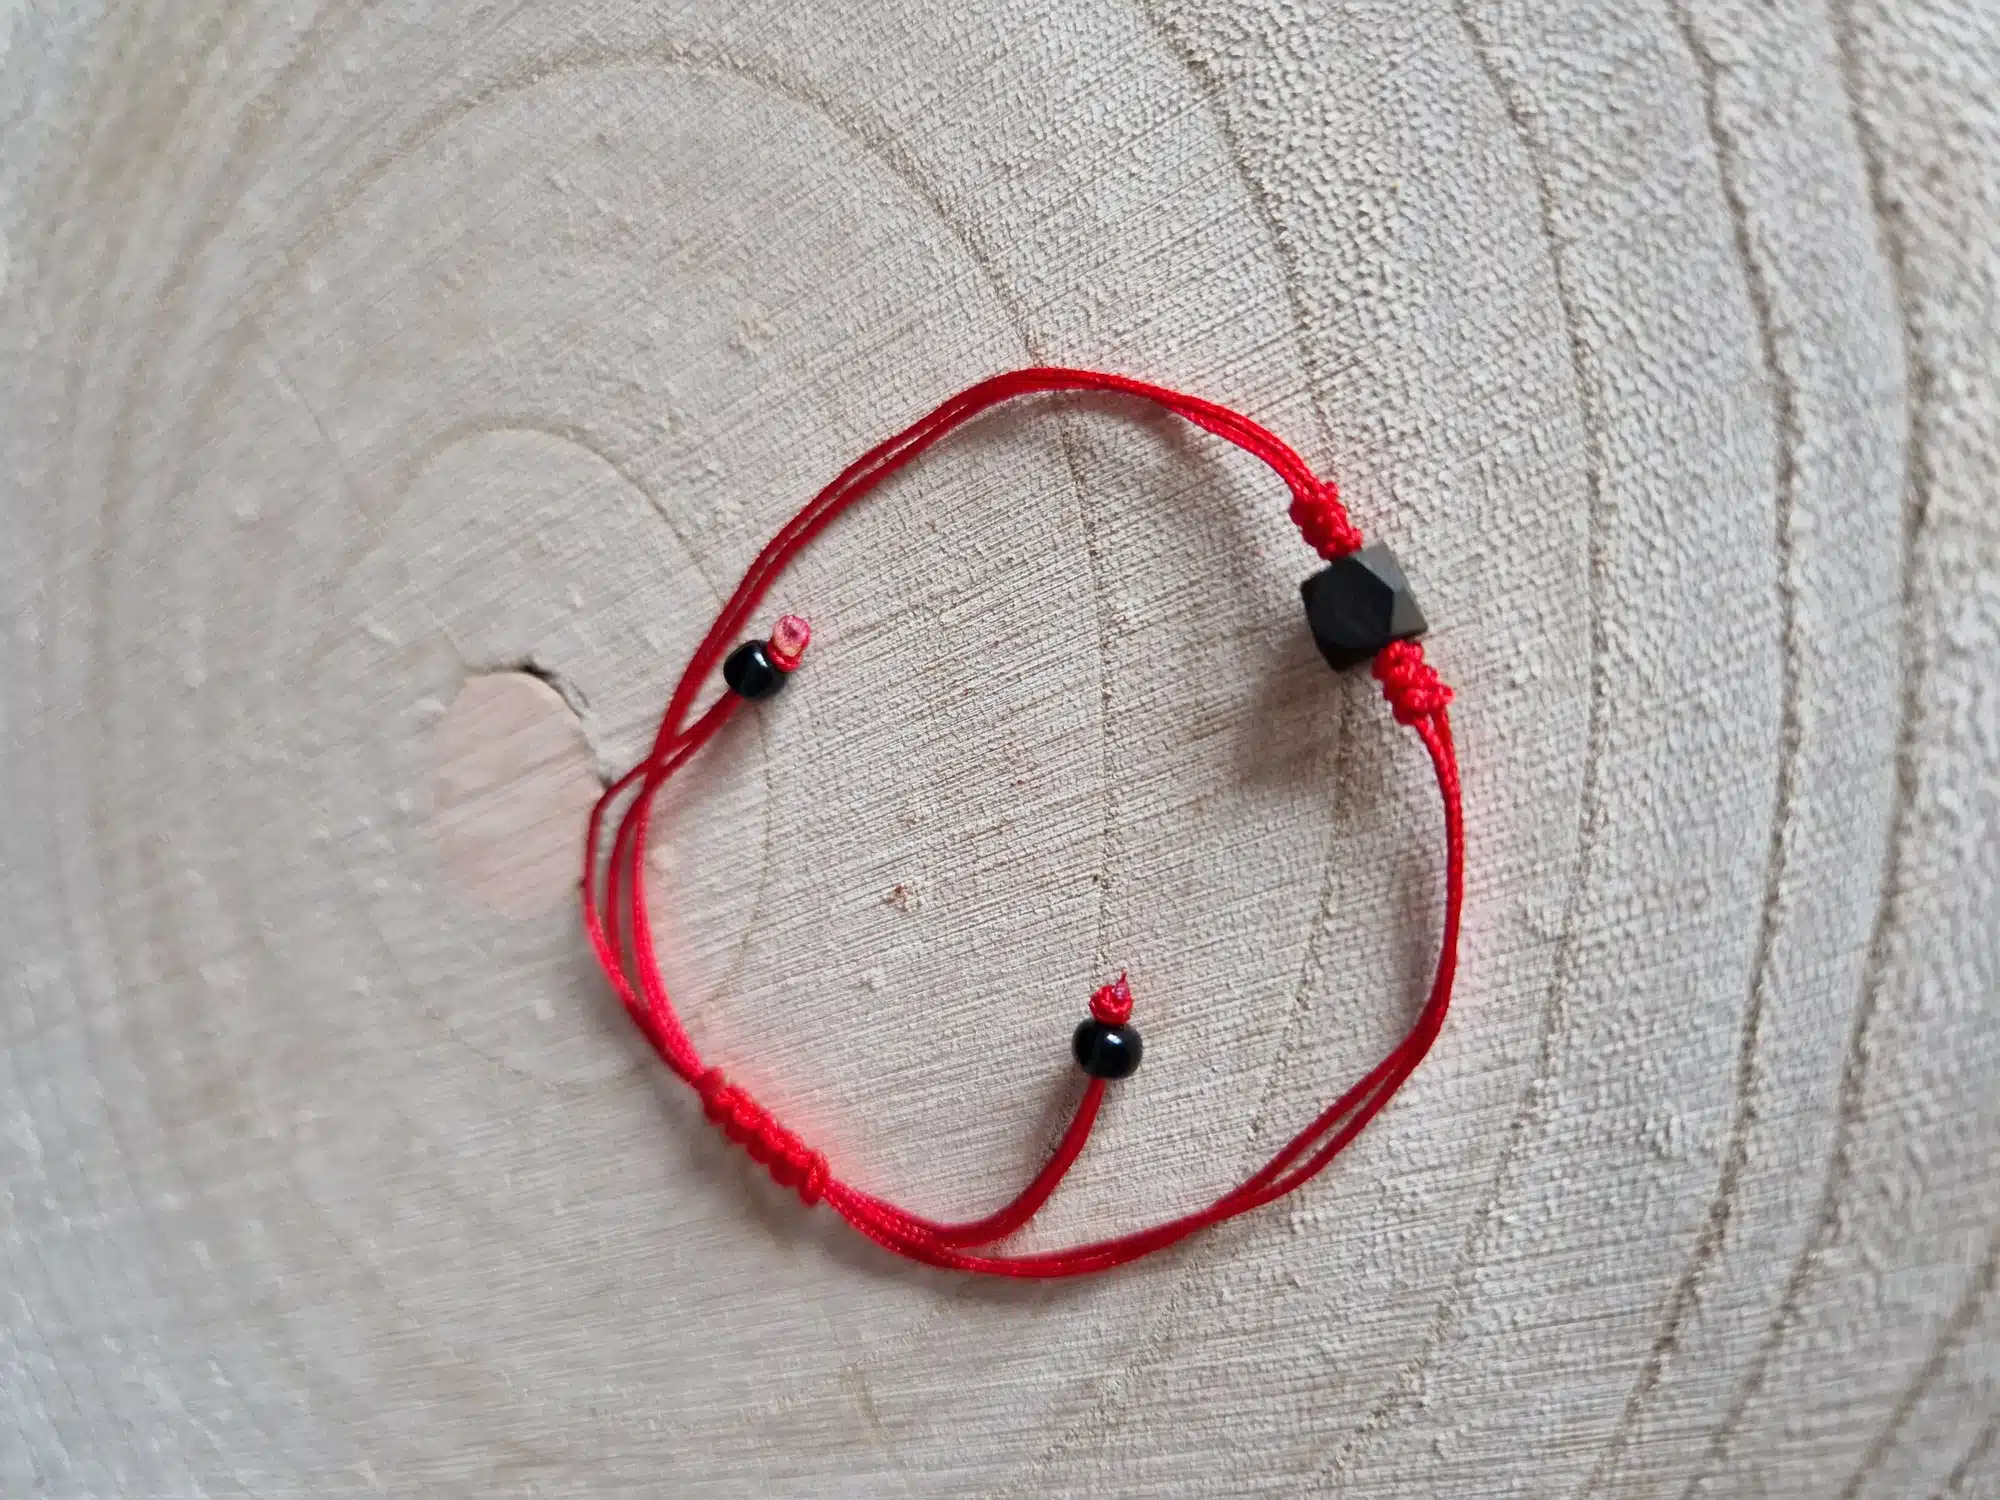 Azeviche Stone Bracelet - Red